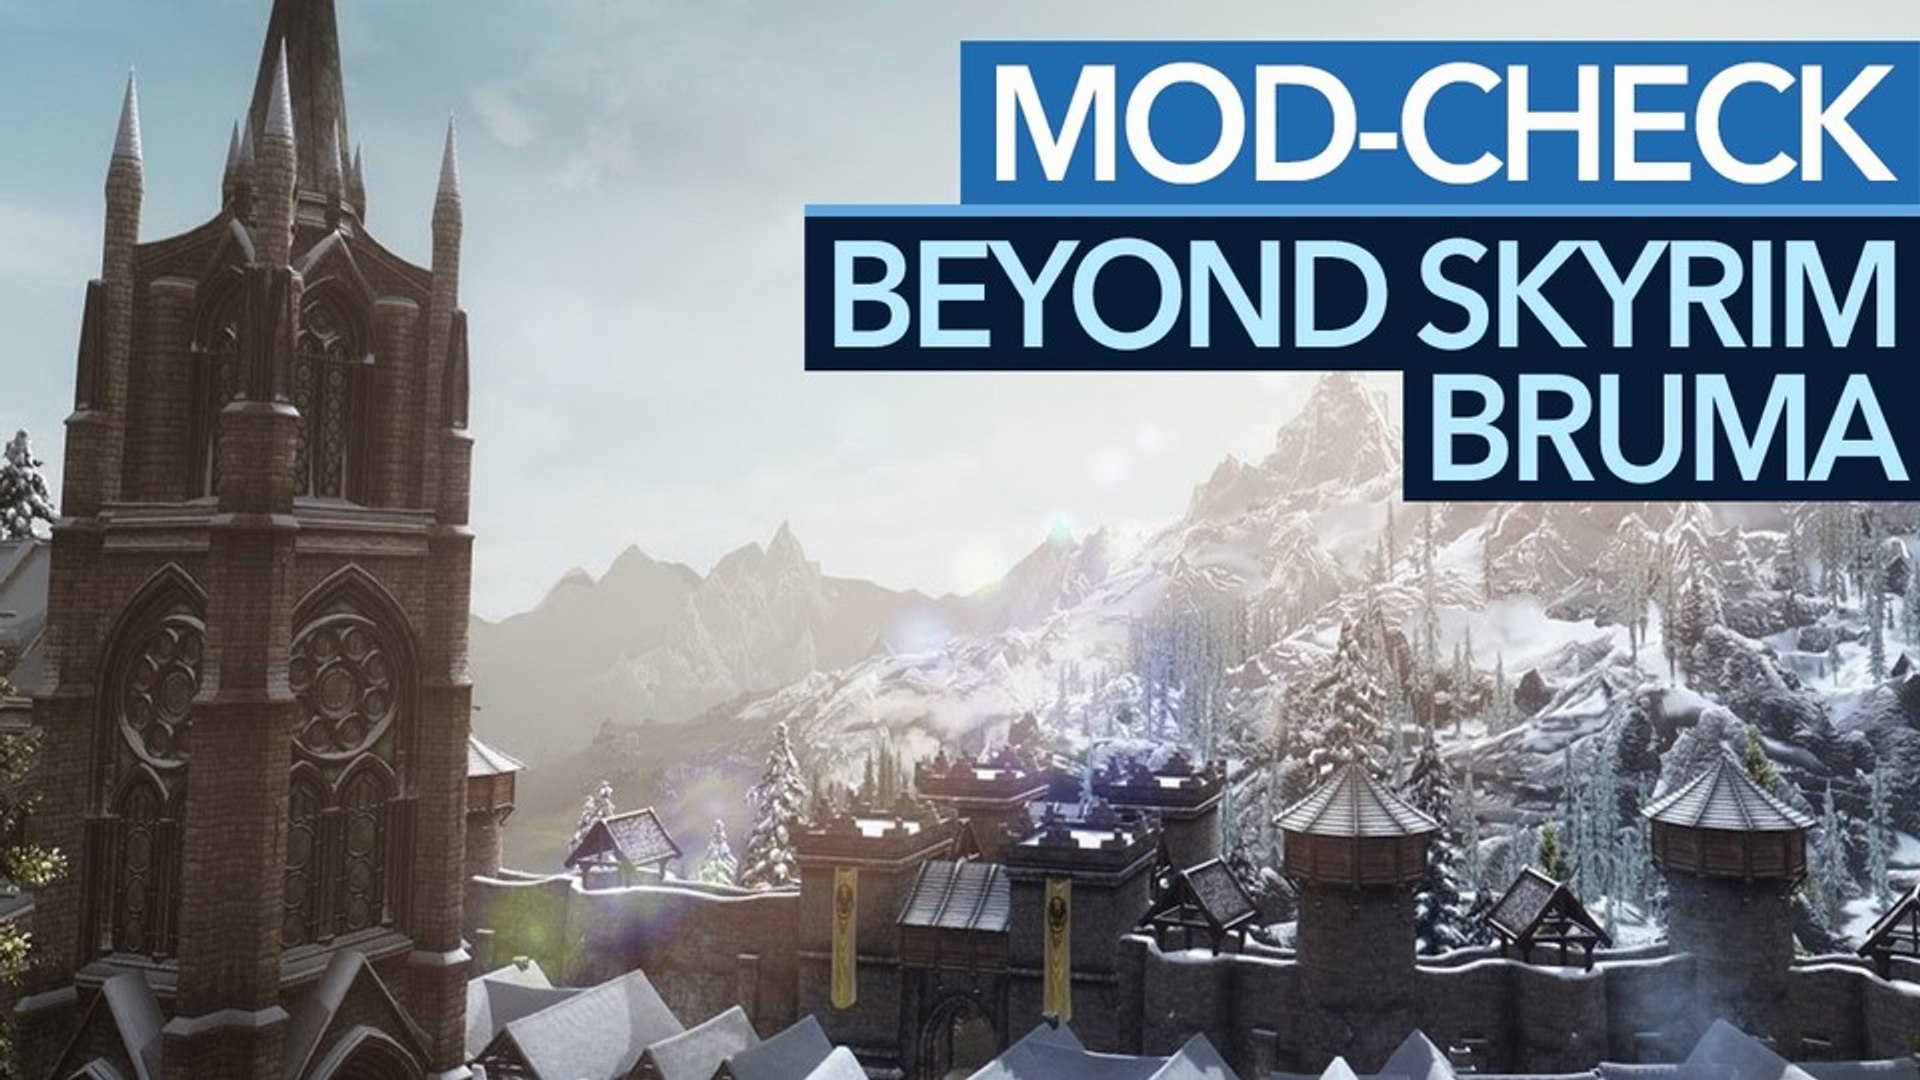 Beyond Skyrim: Bruma - Video-Check: Diese Mod ist nur der Anfang! - video  Dailymotion